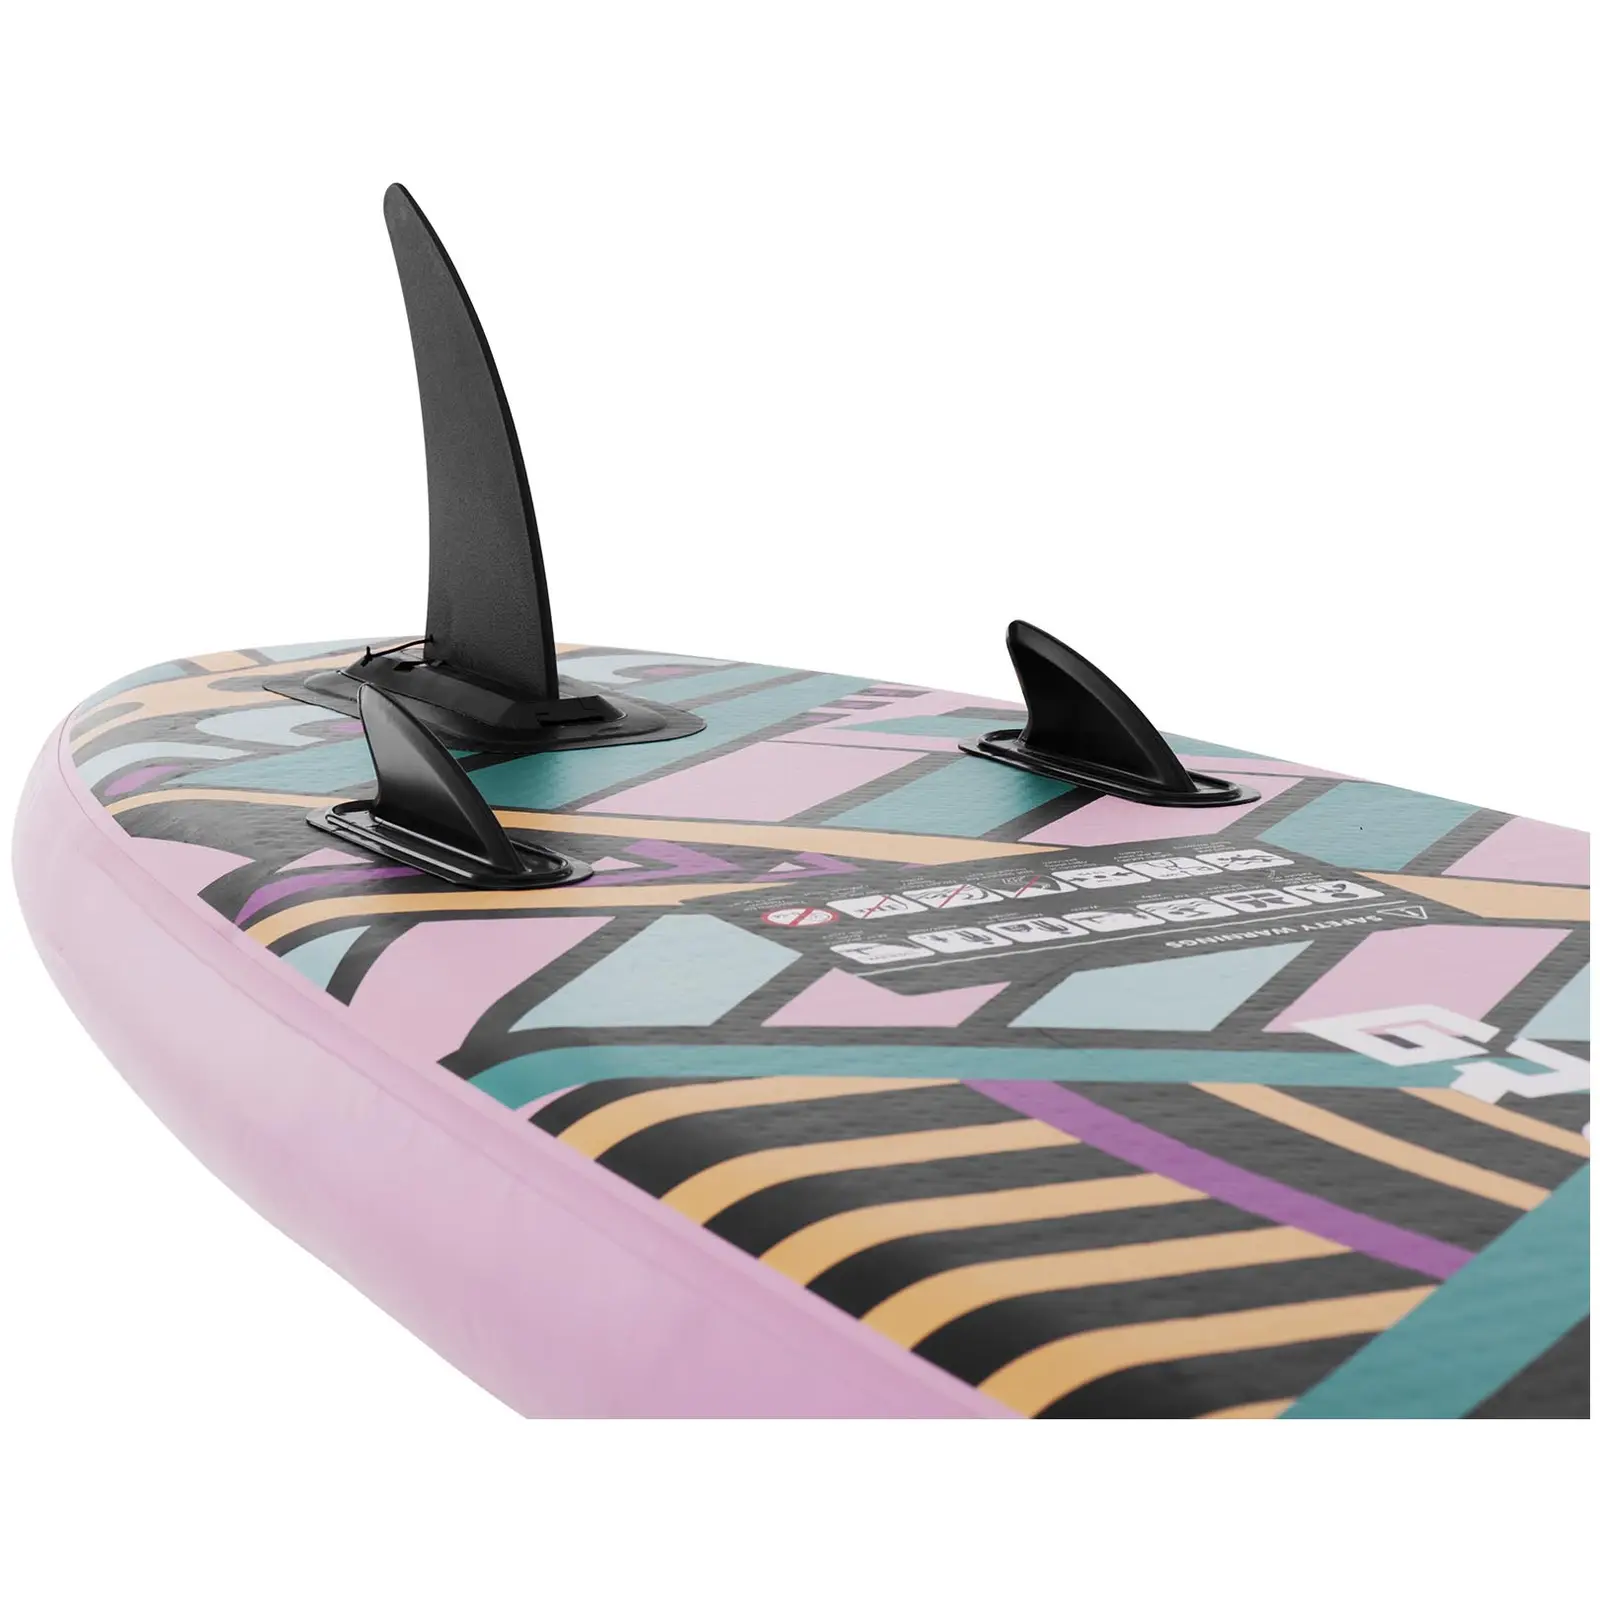 Stand Up Paddleboard - 100 kg - aufblasbar - pink